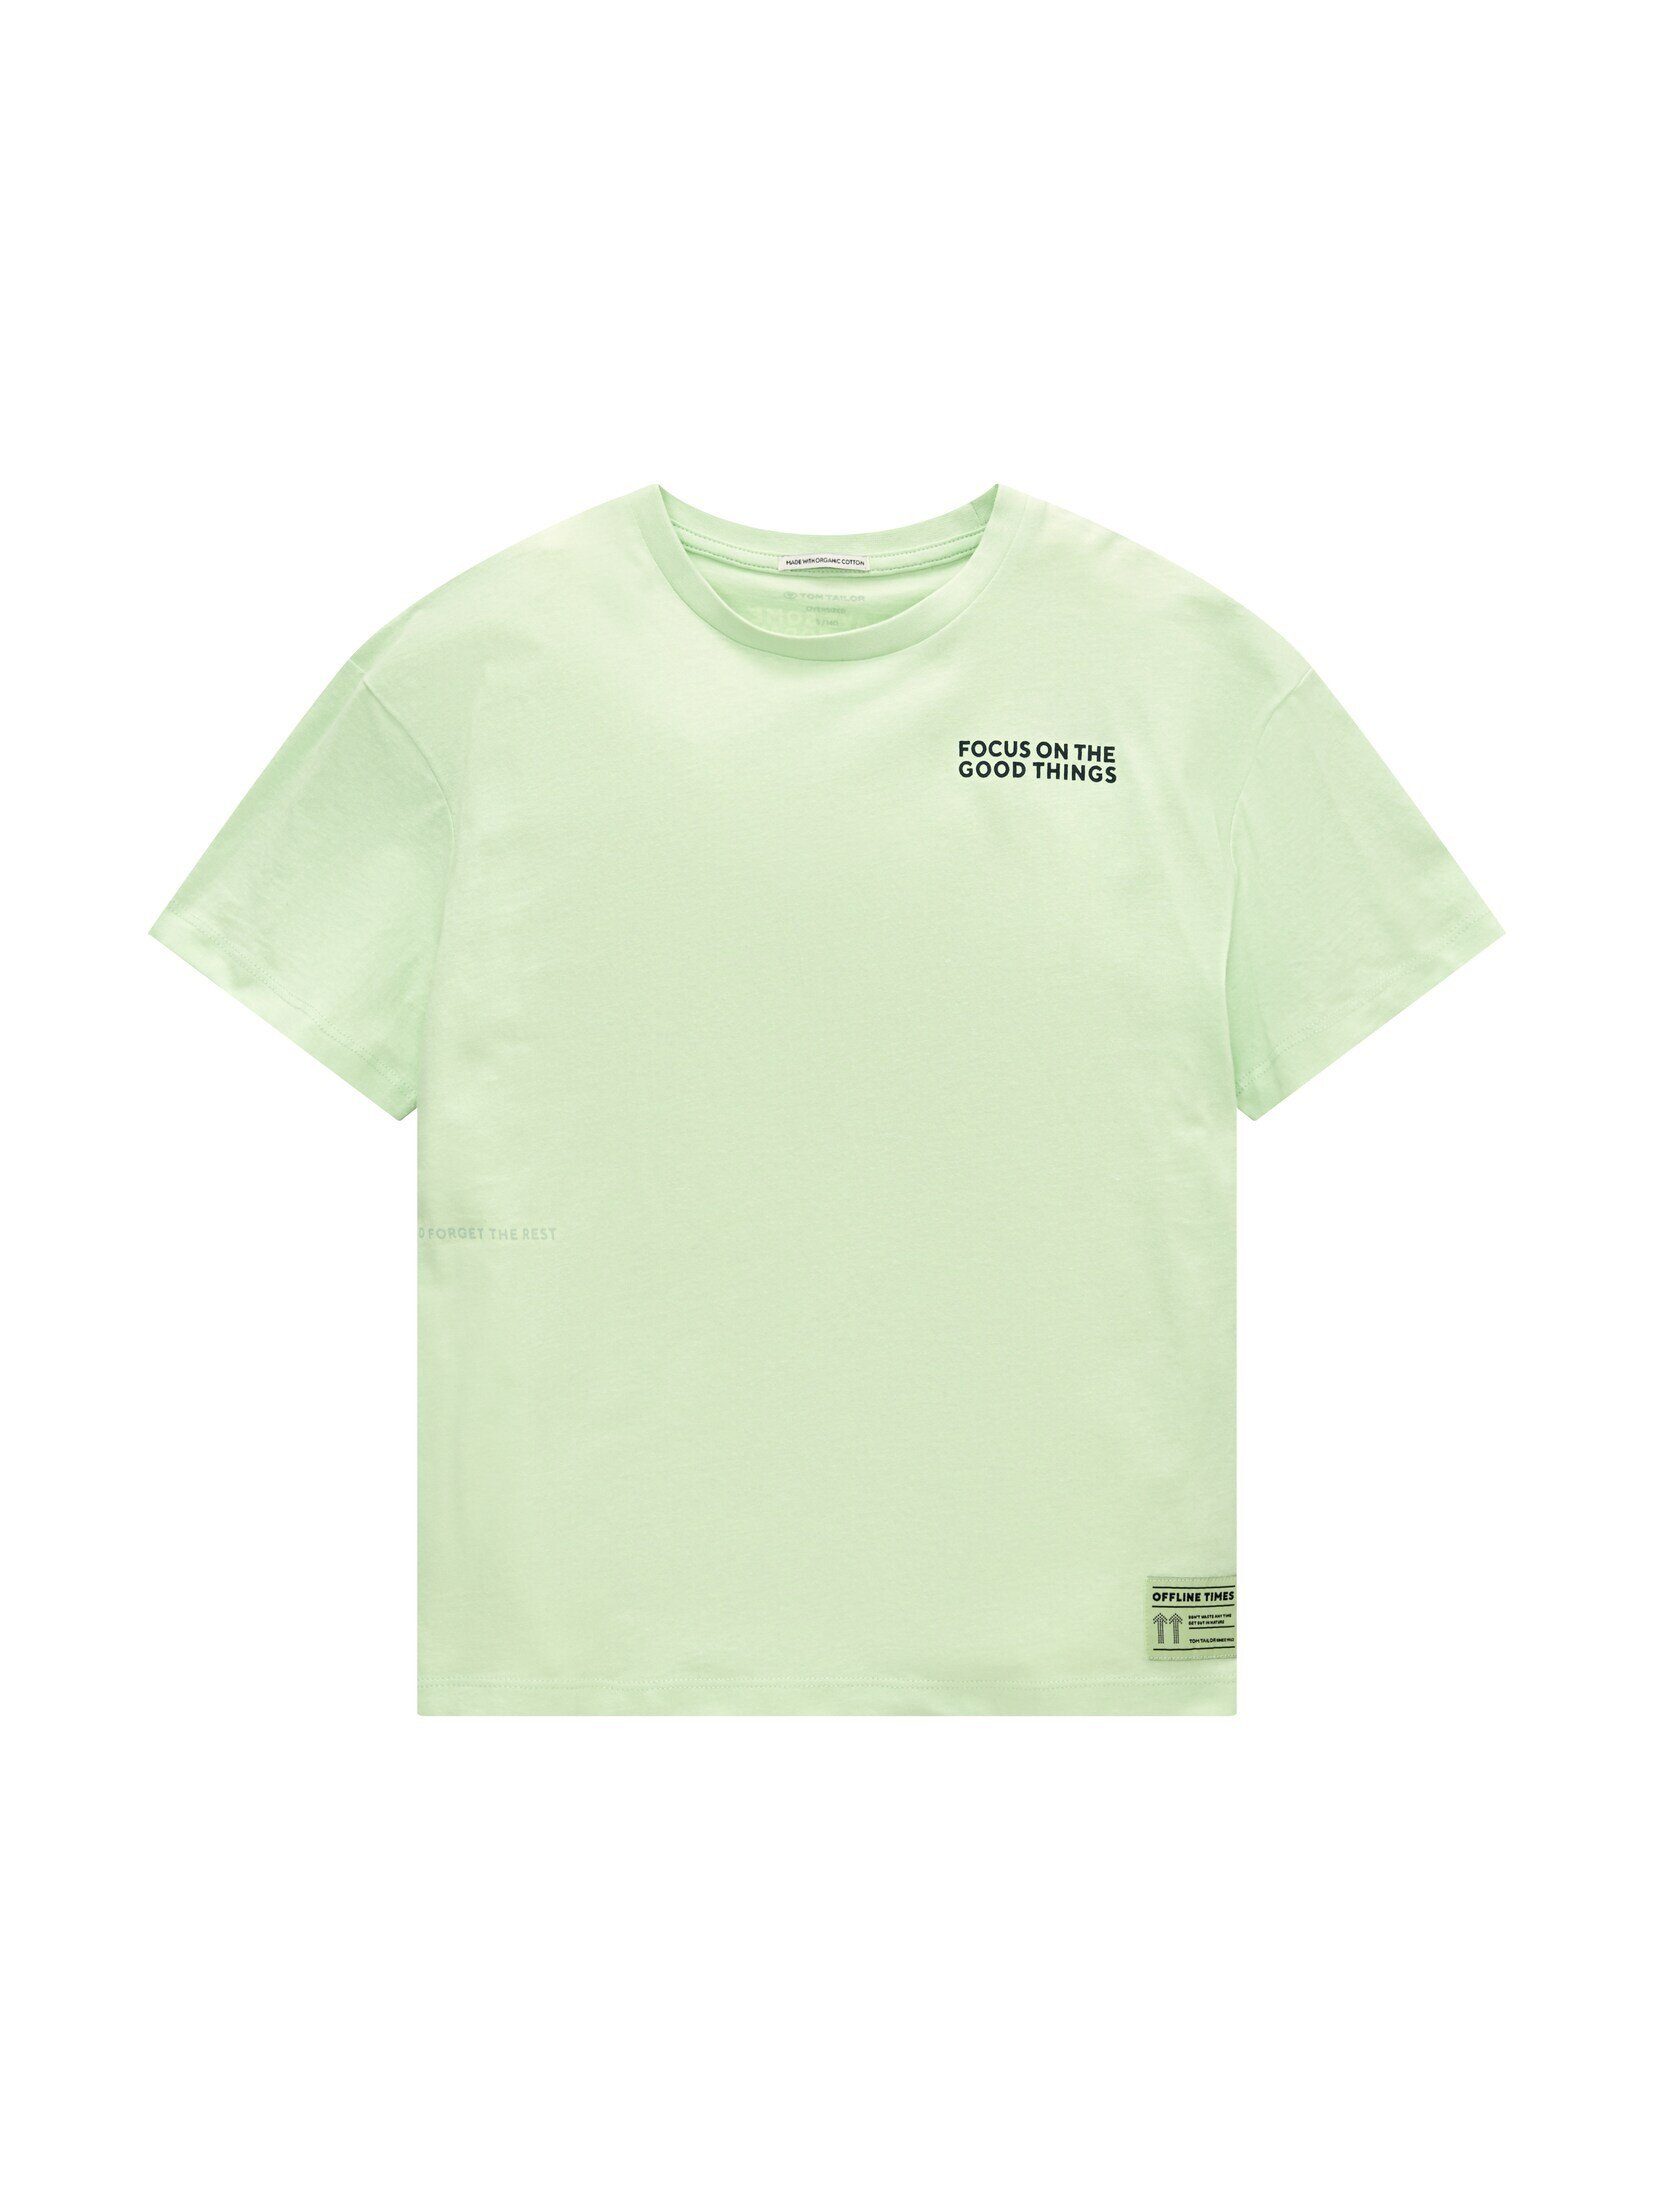 TOM TAILOR T-Shirt T-Shirt mit Textprint fresh apple lime green